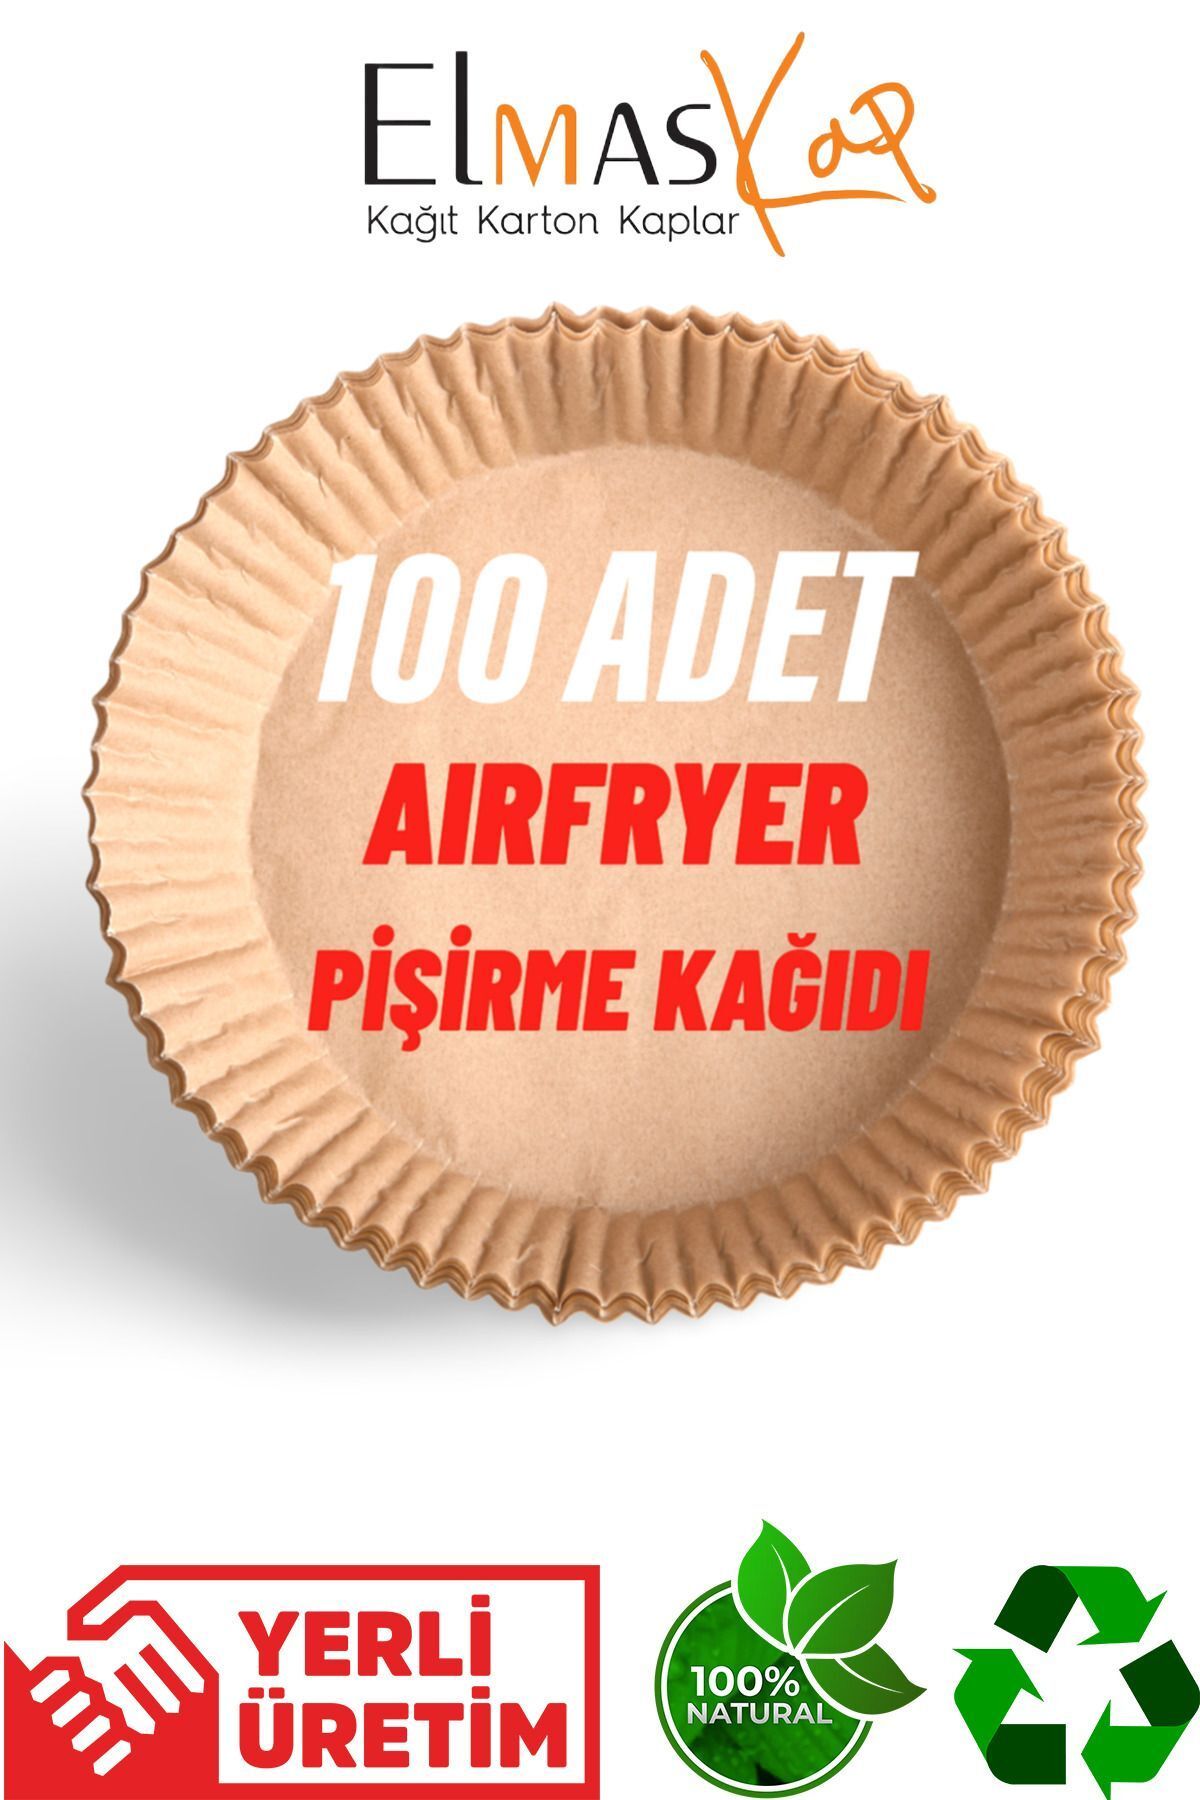 Elmas Kap Airfryer Pişirme Kağıdı 100 Adet Yuvarlak Yağsız Fritöz Philips Xiaomi Yağl Kağıt Airfreyer Airfry